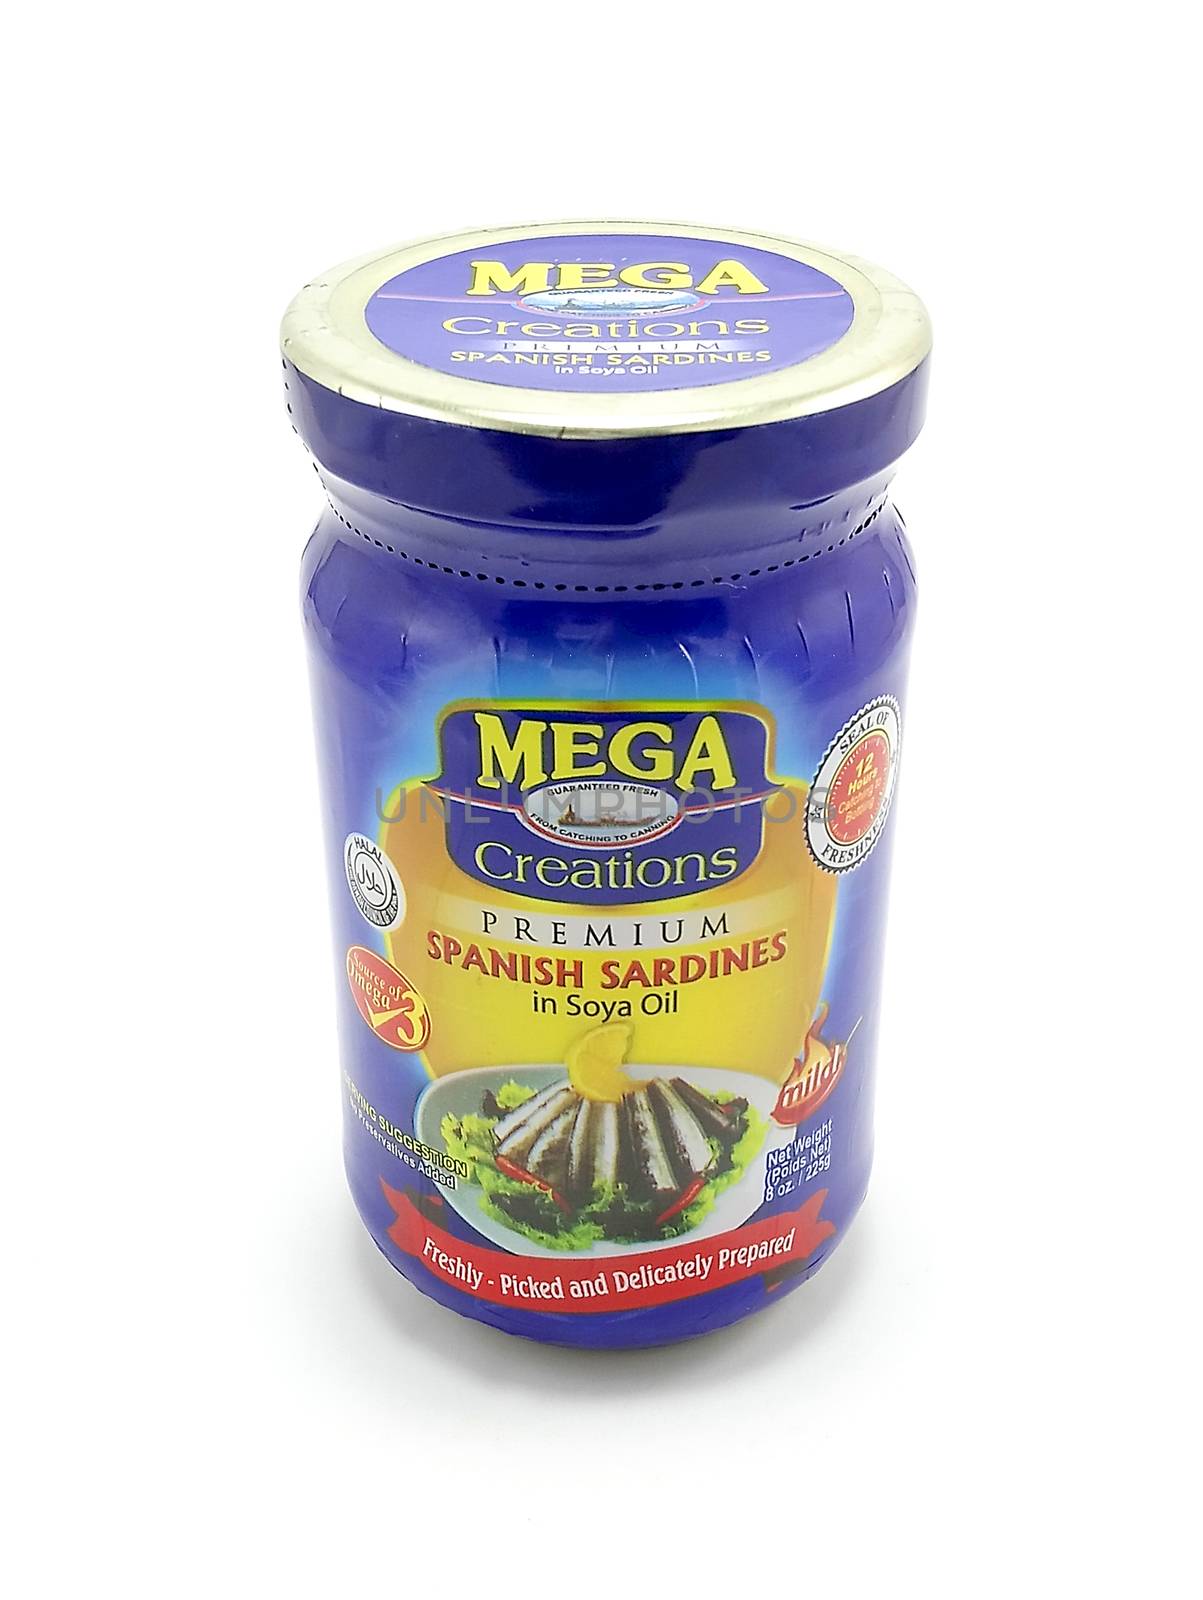 Mega creations premium spanish sardines in soya oil in Manila, P by imwaltersy